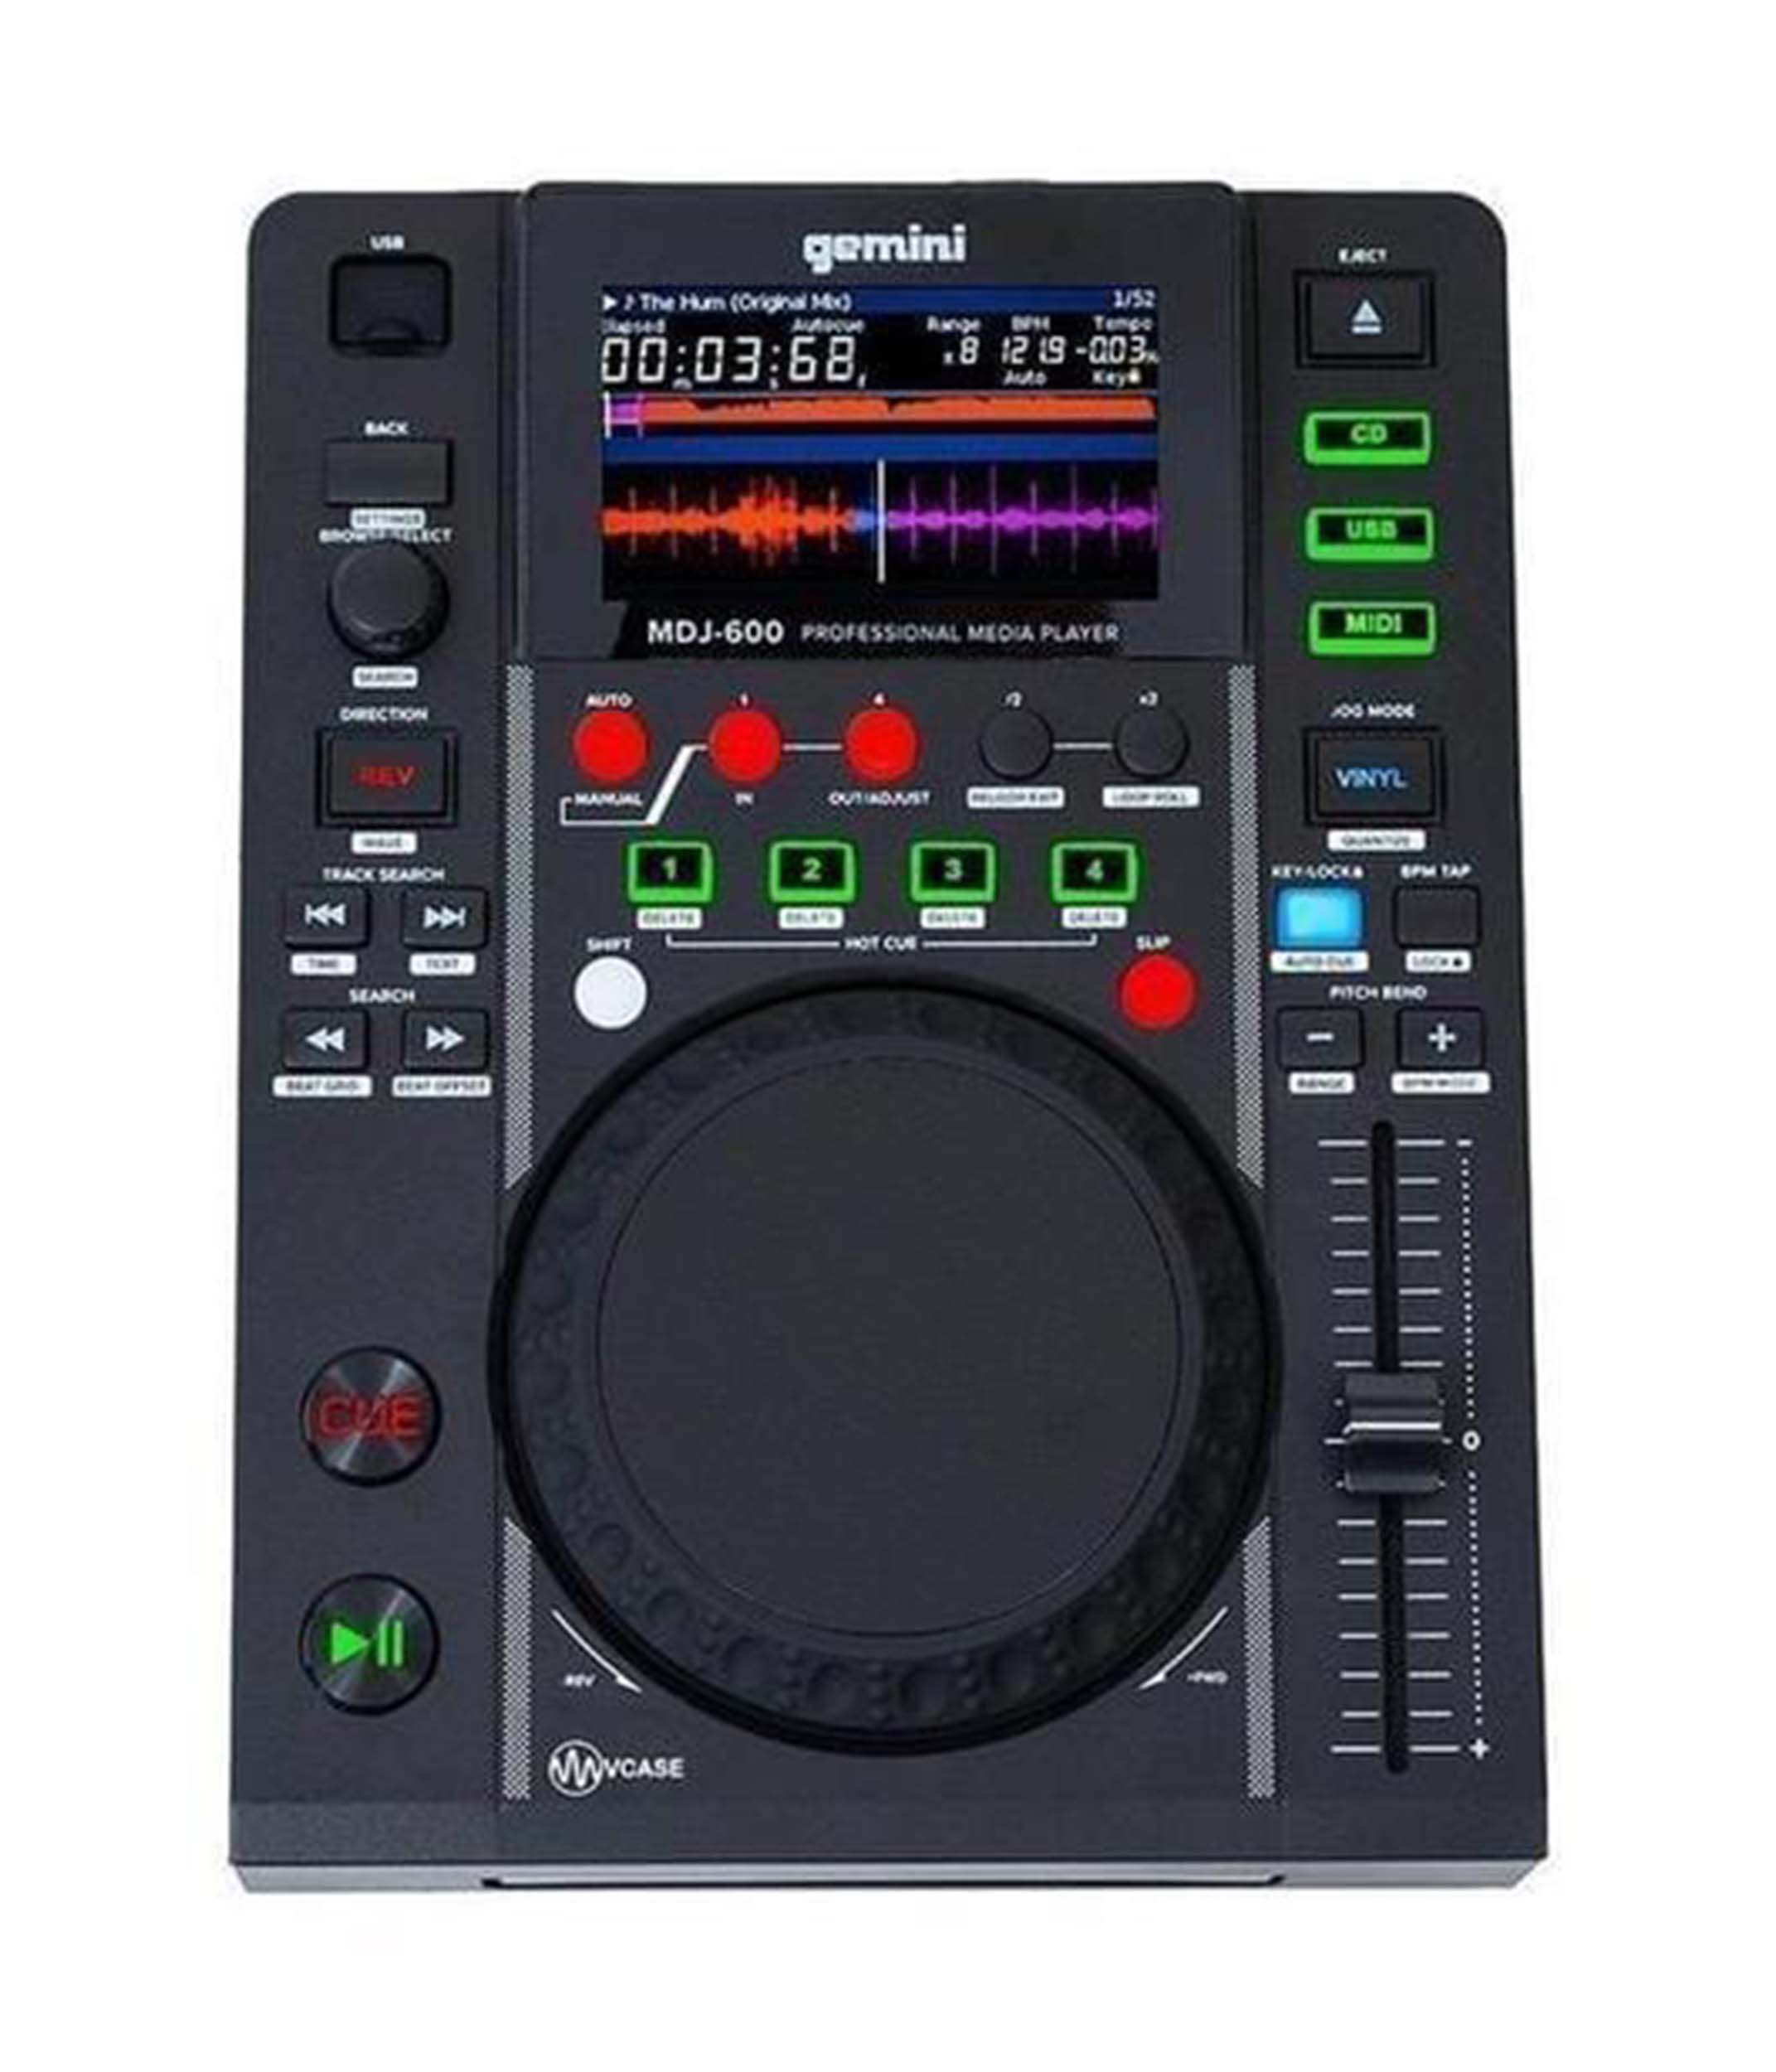 Gemini Sound MDJ-600 Professional CD and USB Media Player - Hollywood DJ